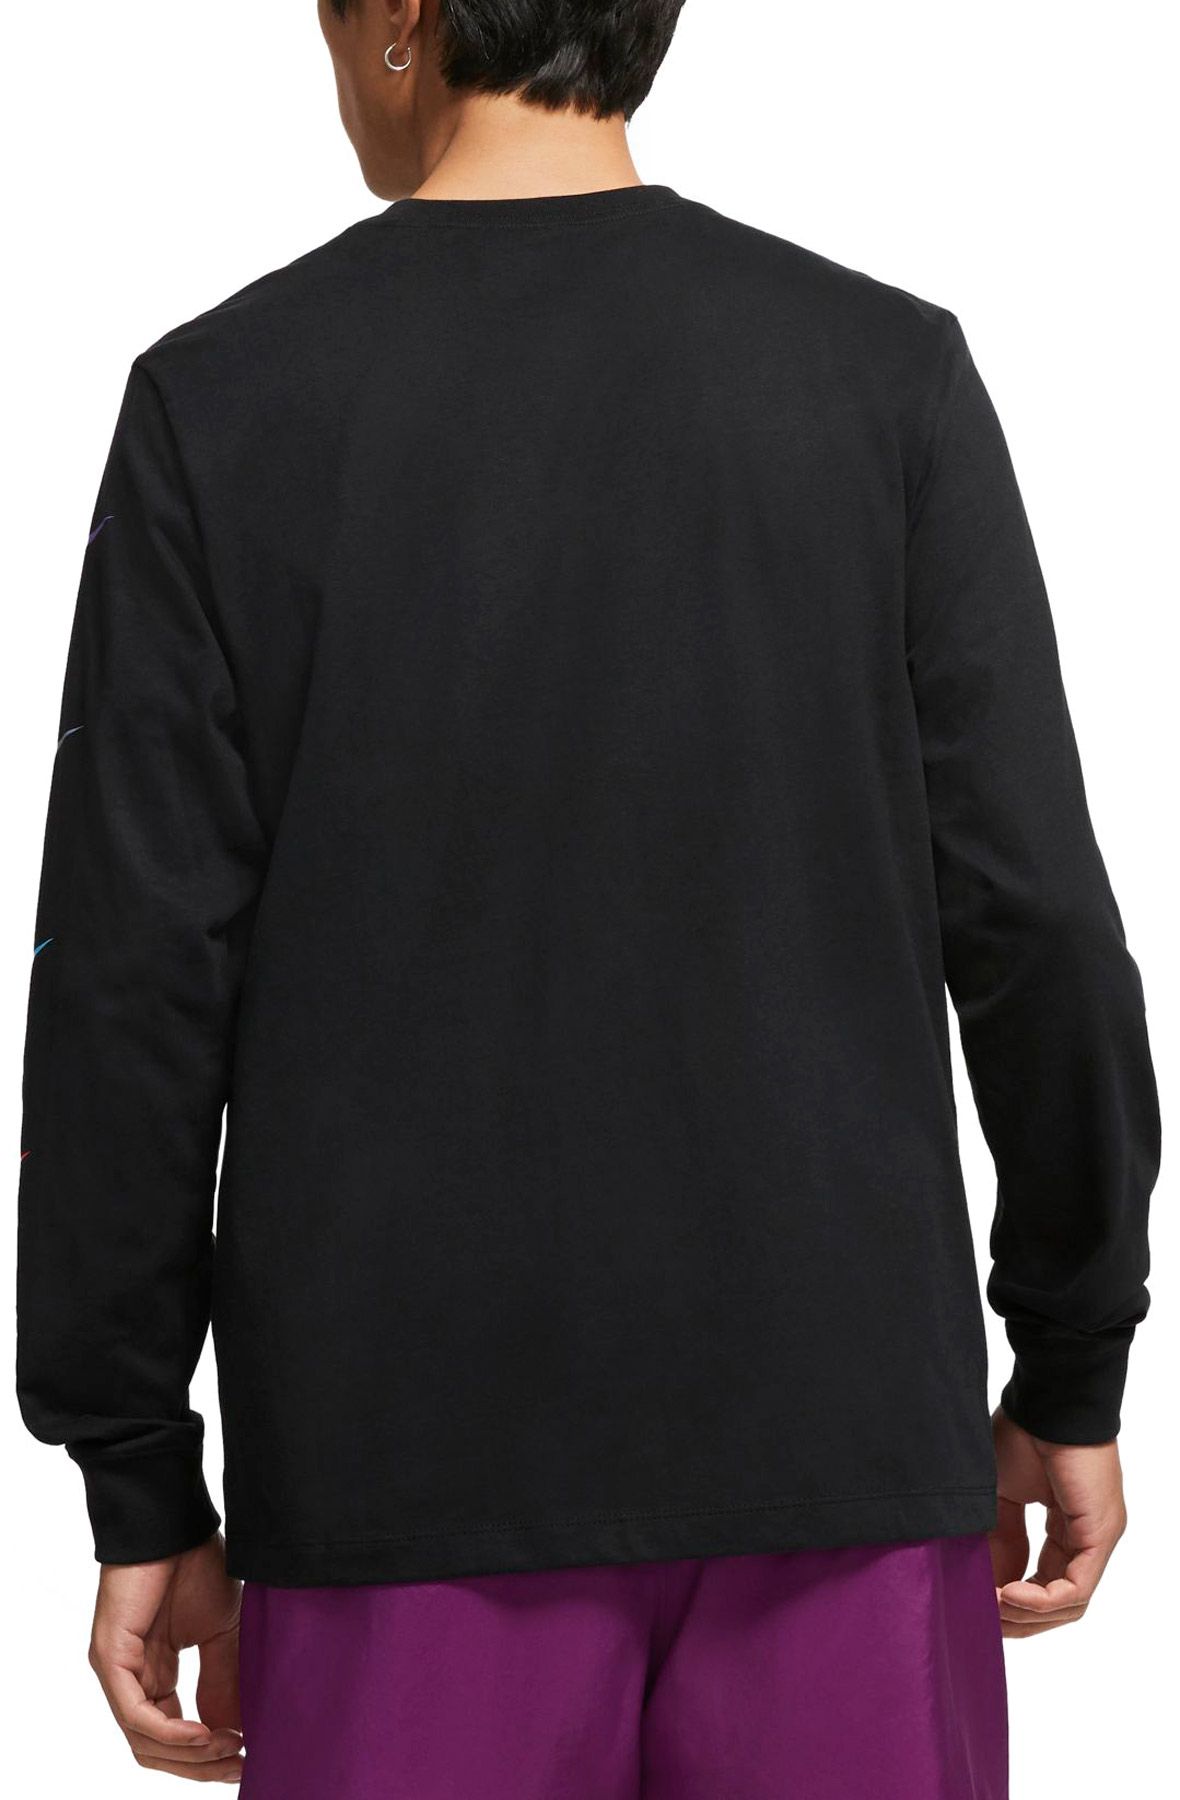 NIKE Sportswear Long-Sleeve T-Shirt DB6188 010 - Shiekh